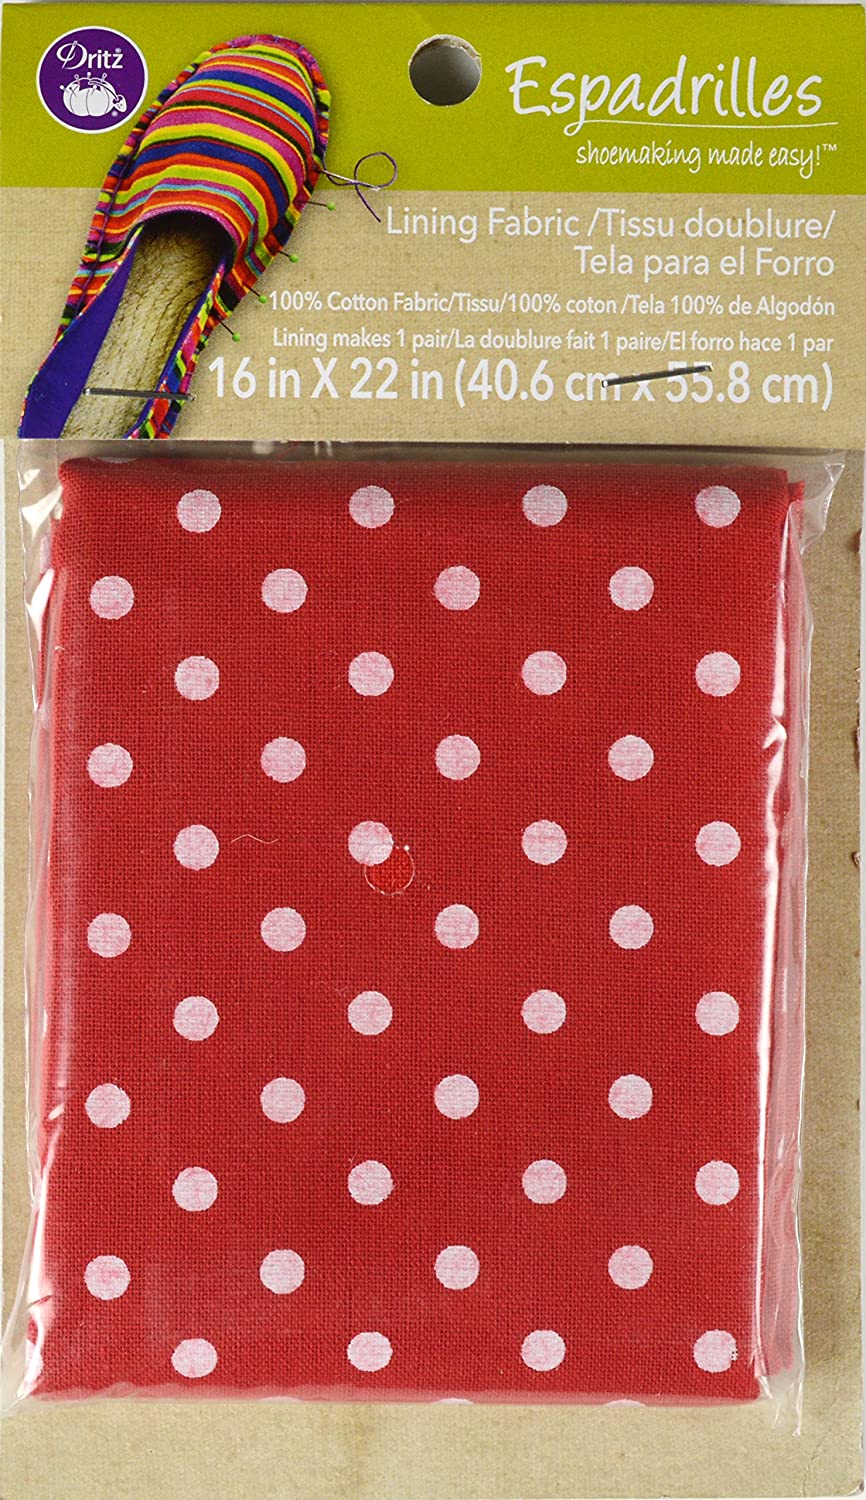 Dritz Espadrilles Lining Fabric, 16